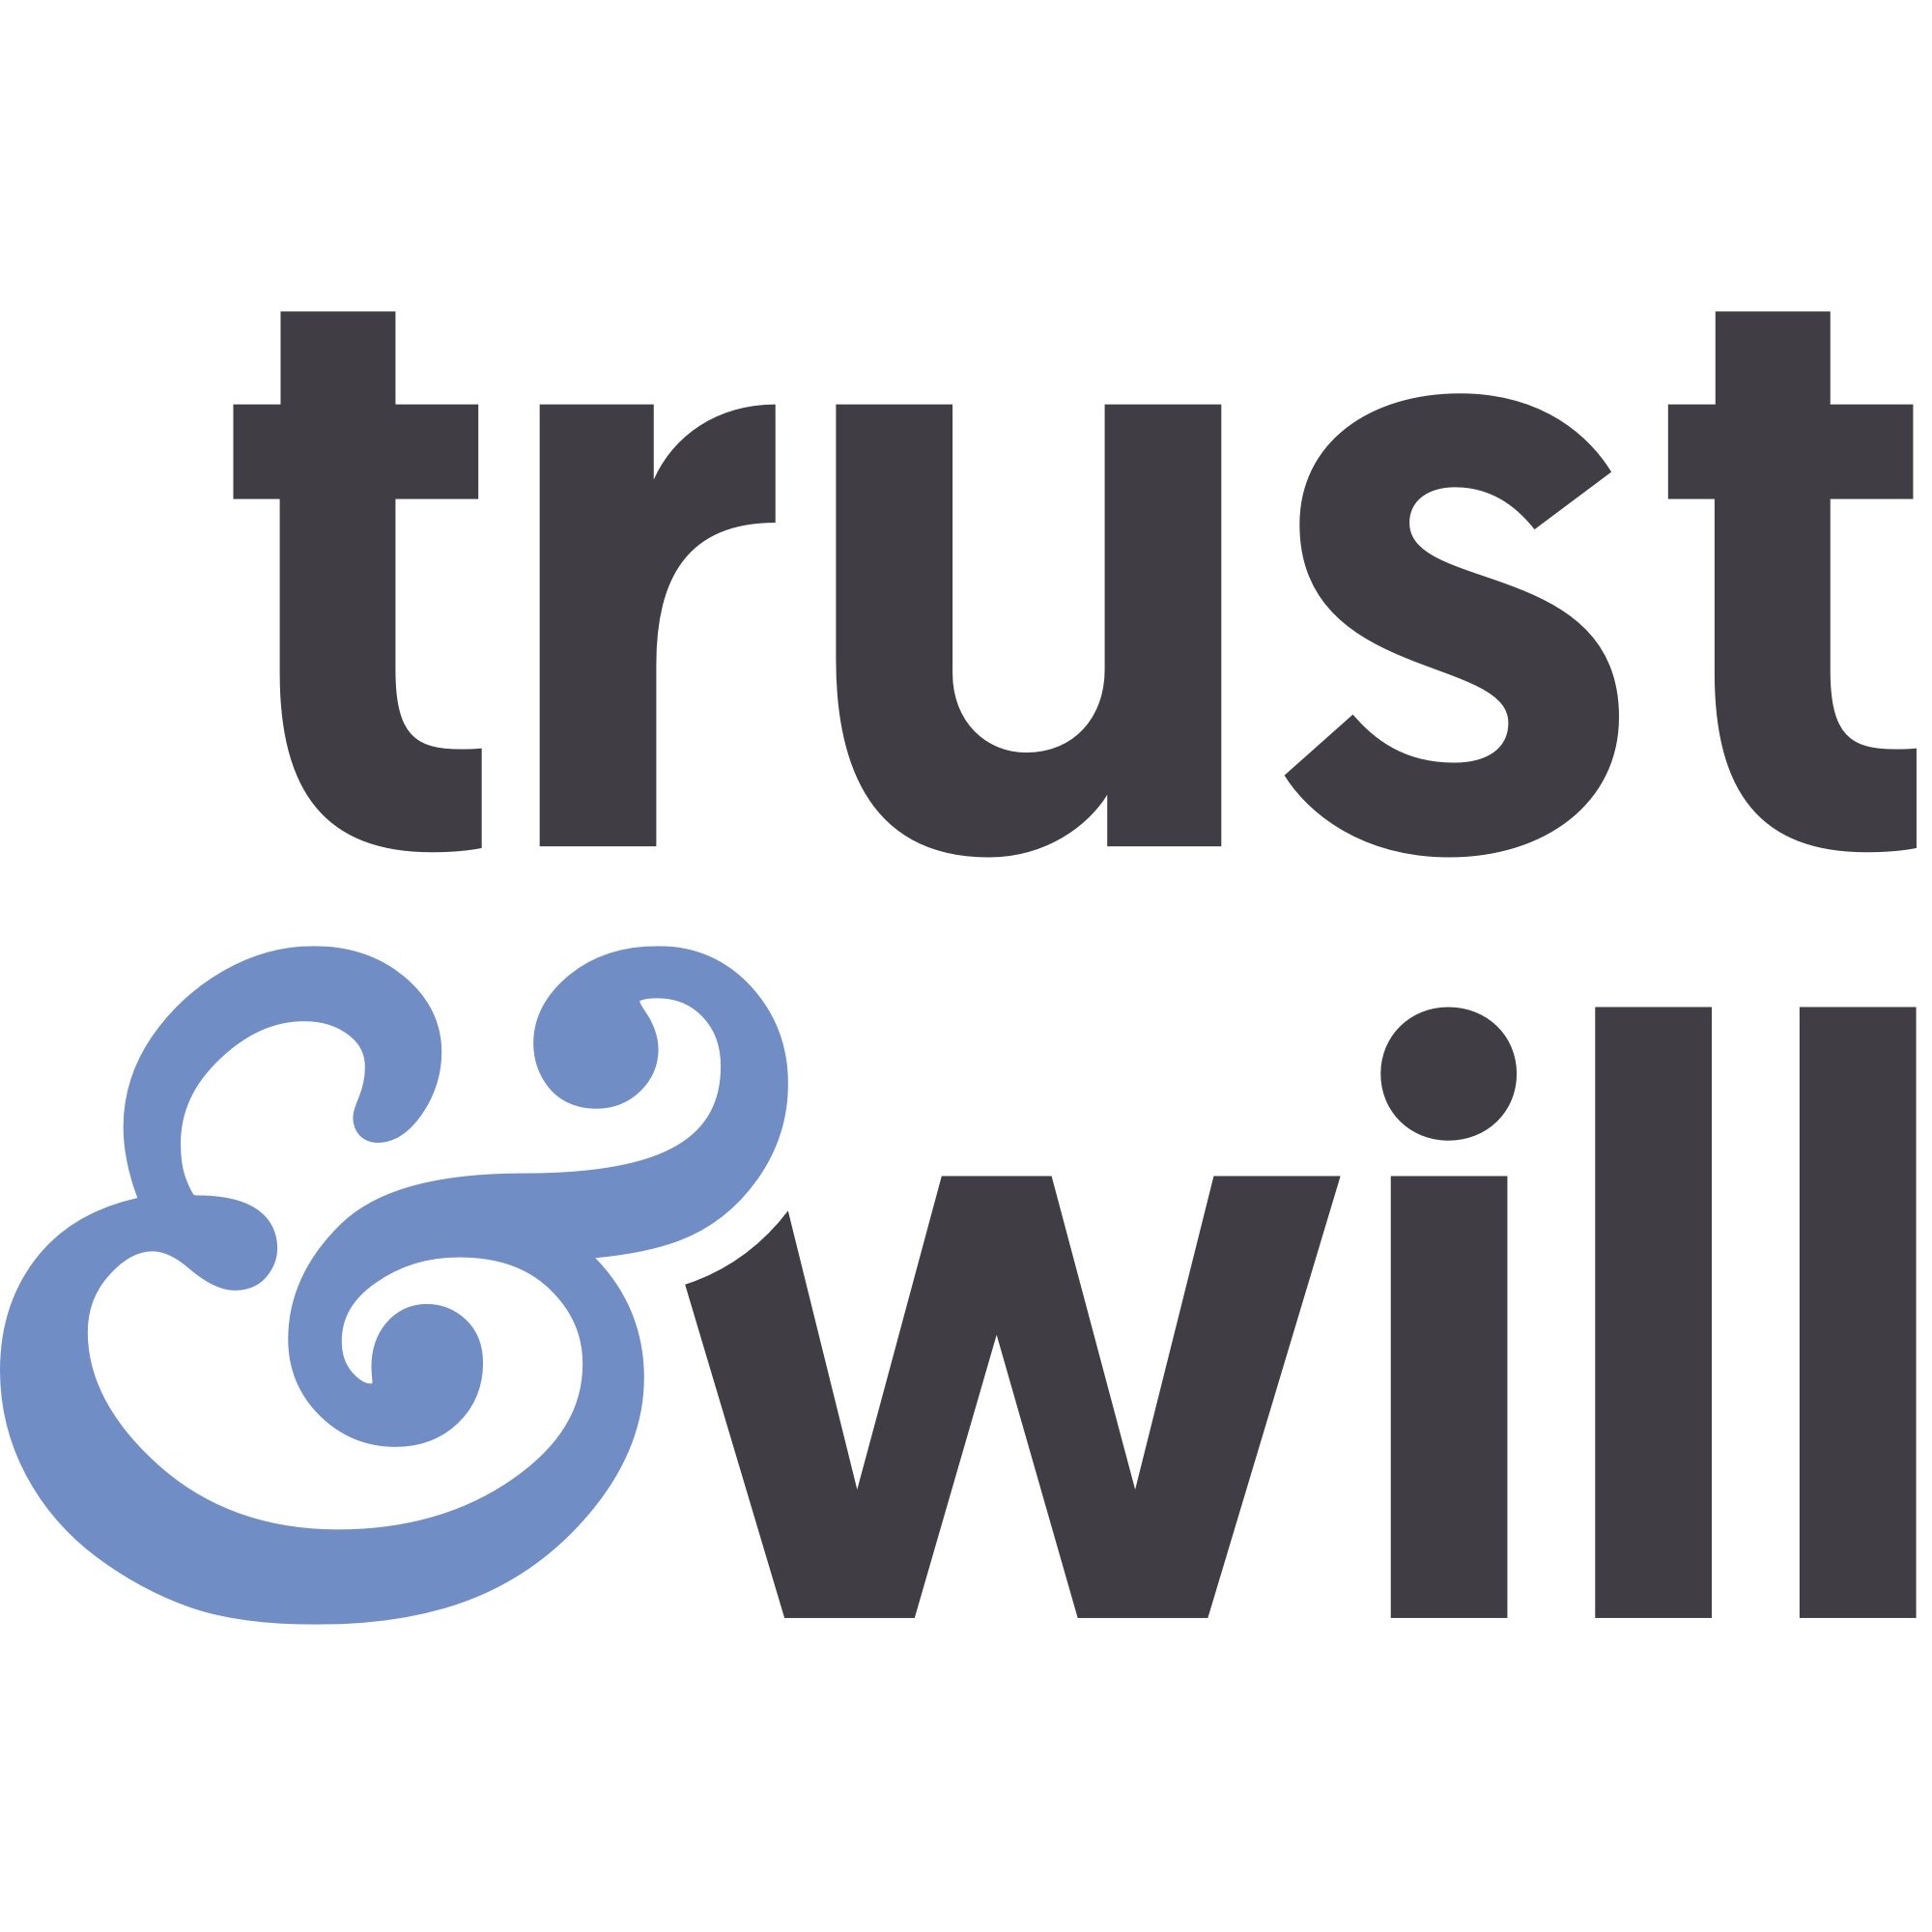 Trust & Will